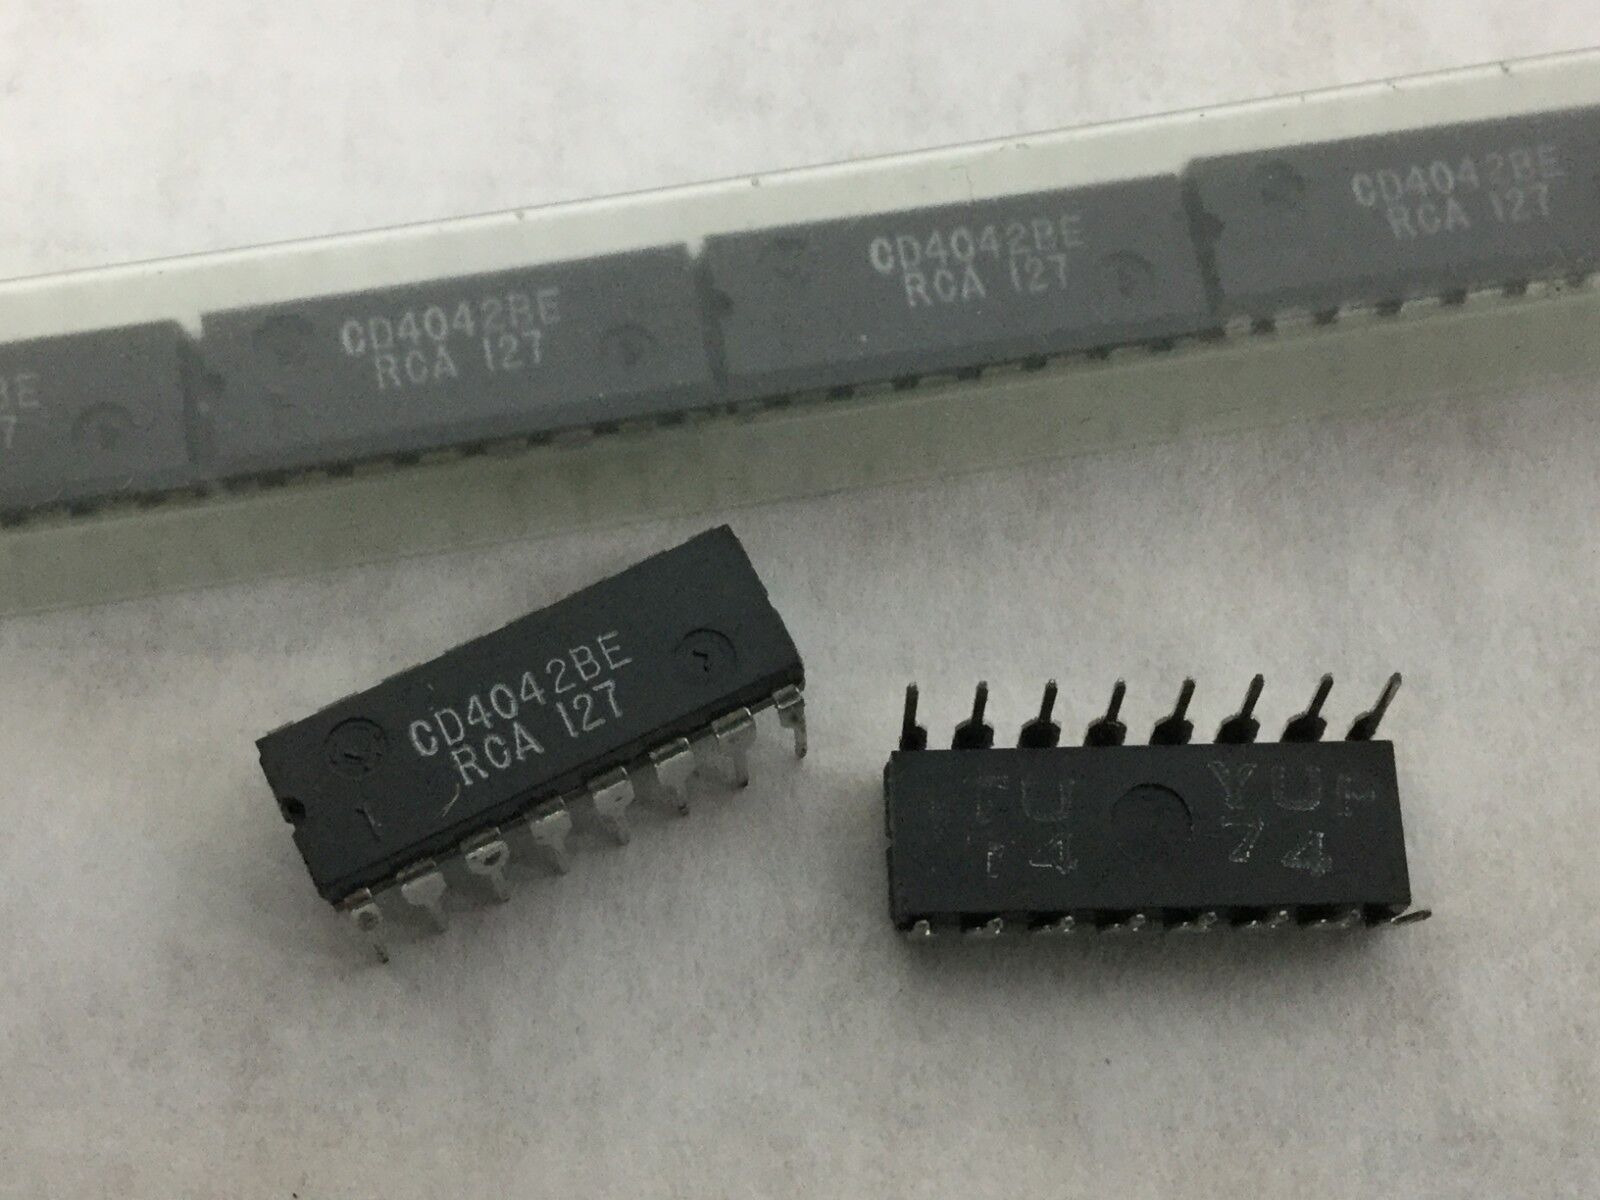 Genuine RCA CD4042BE 16 Pin Dip  Lot of 25  New in Anti Static Tube